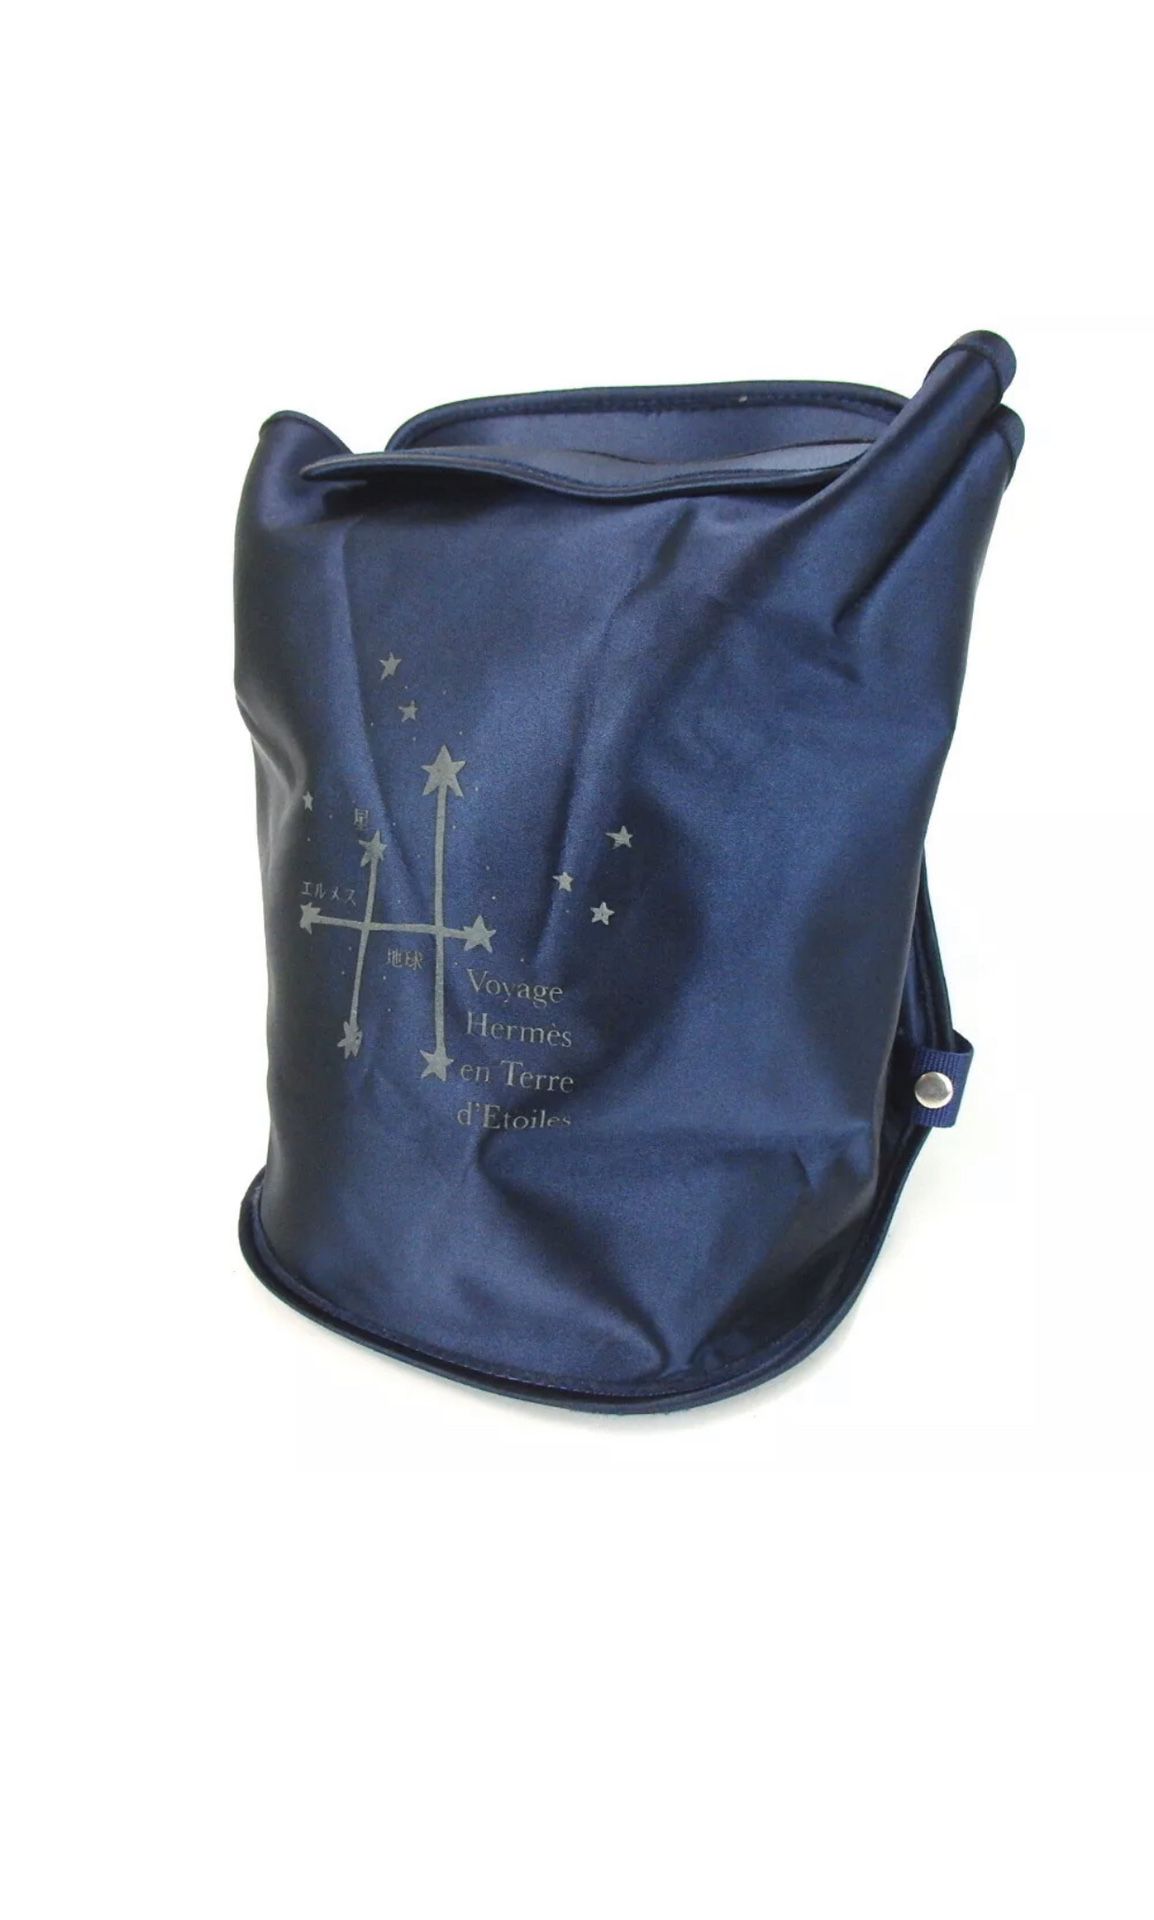 Hermès backpack Nylon bag